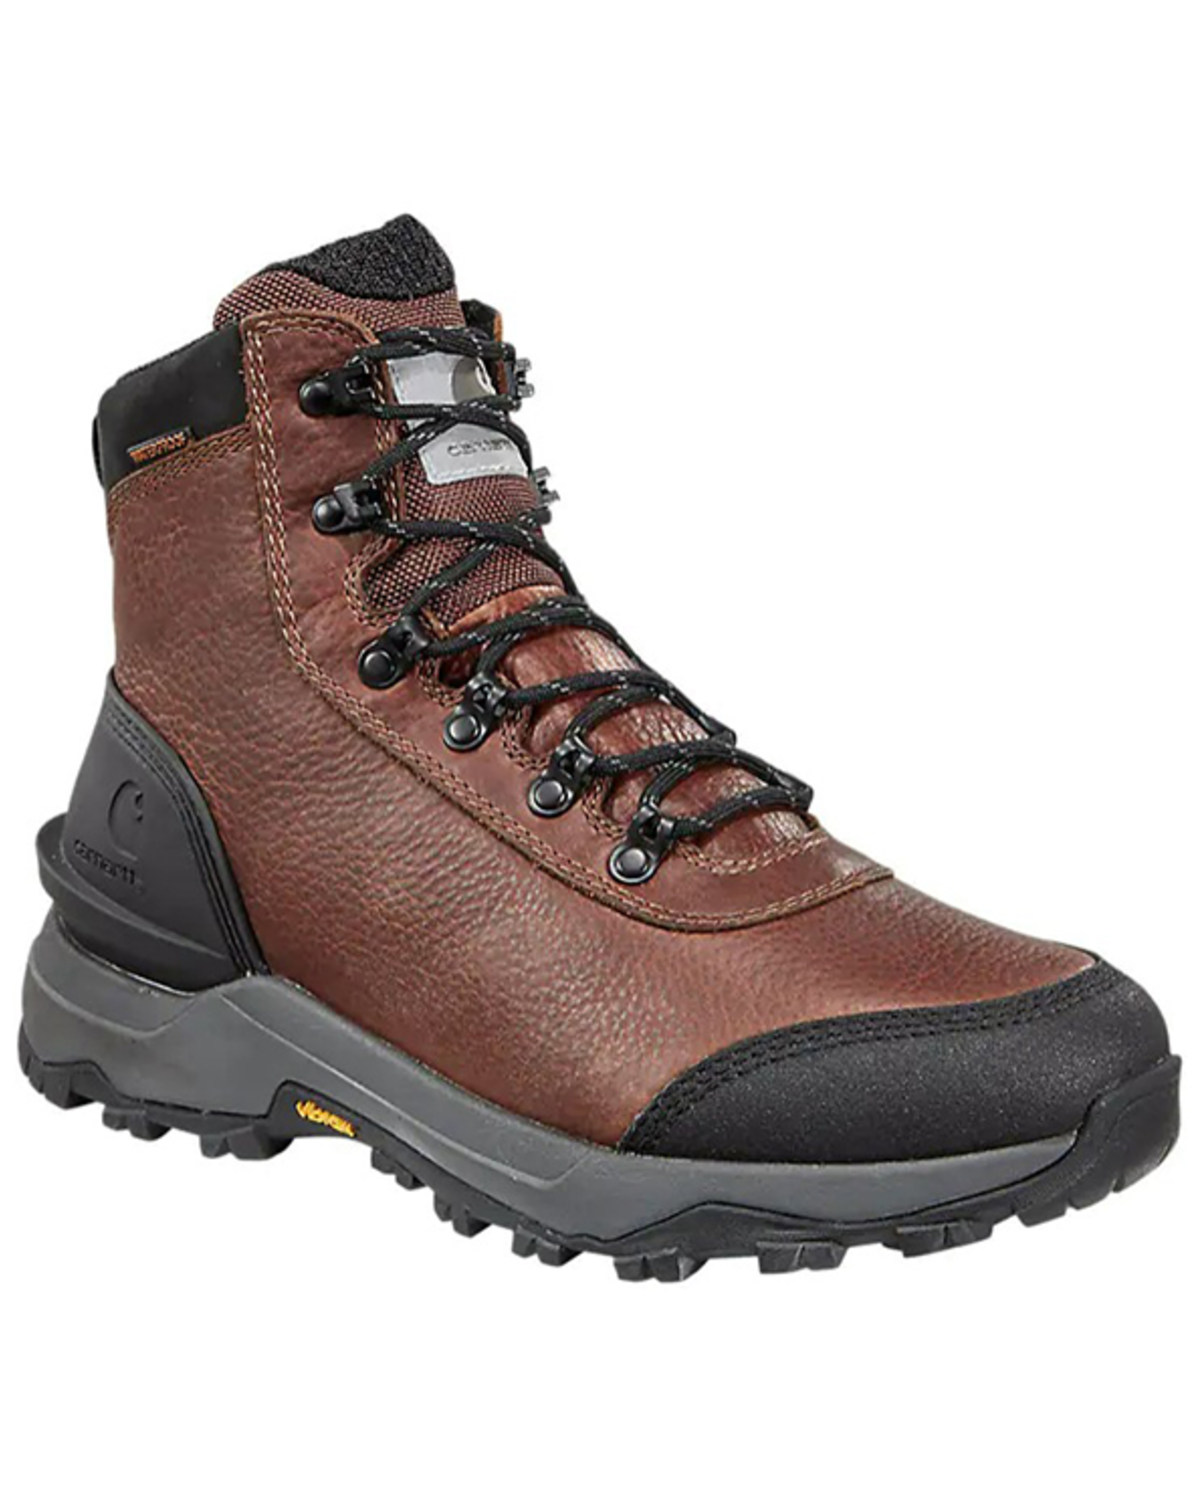 Carhartt Men's Outdoor 6" Hiker Work Boot- Soft Toe